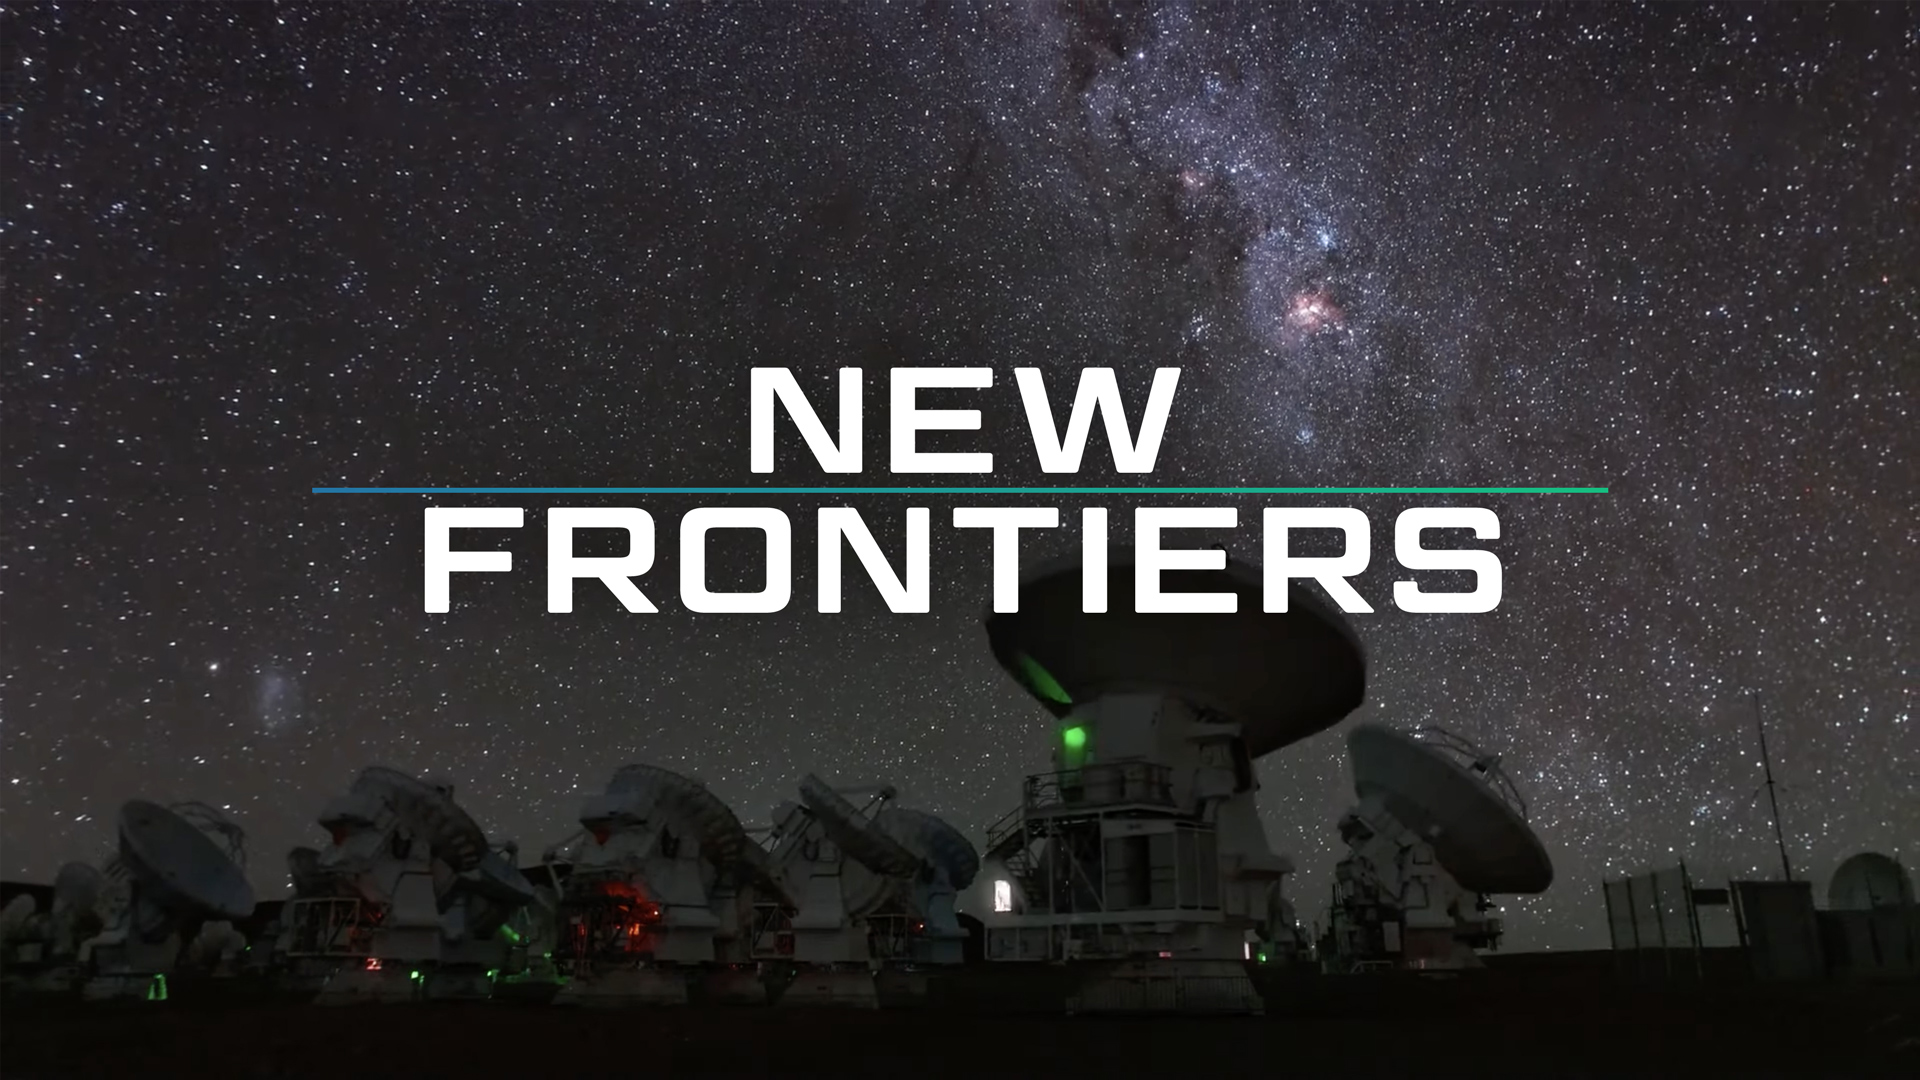 New Frontiers